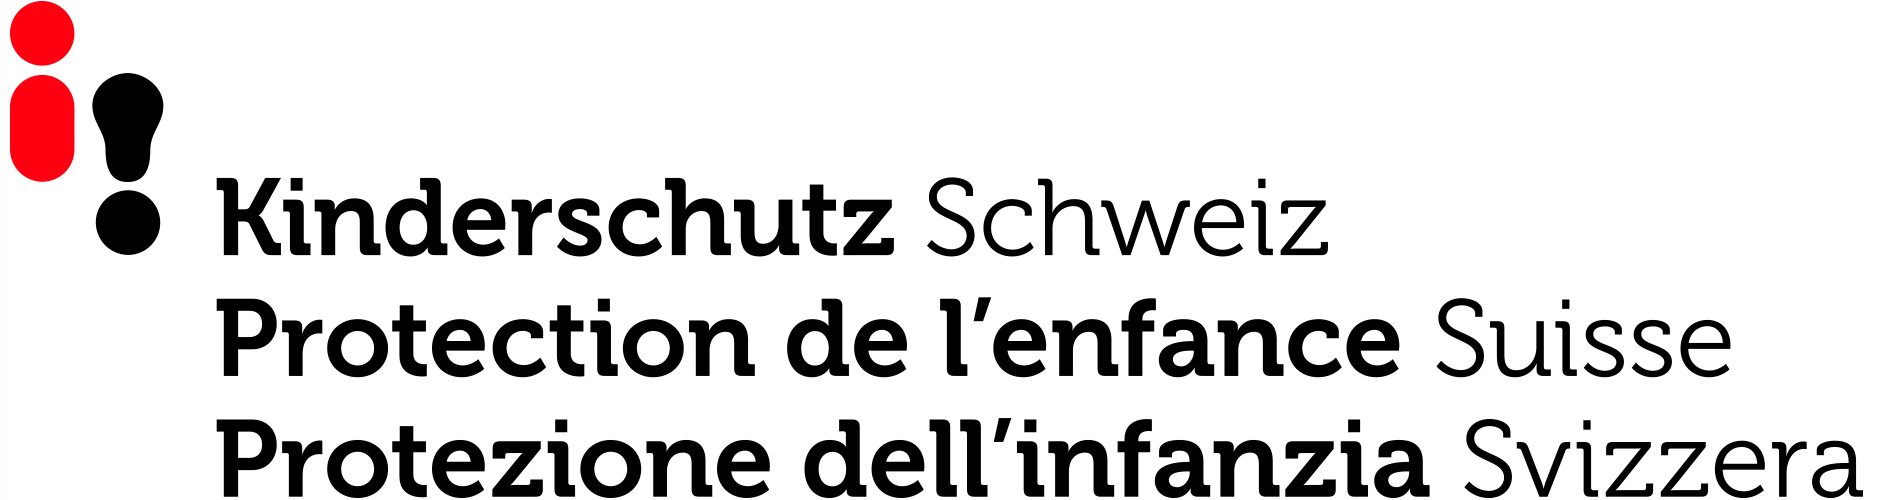 Kinderschutz Schweiz logo